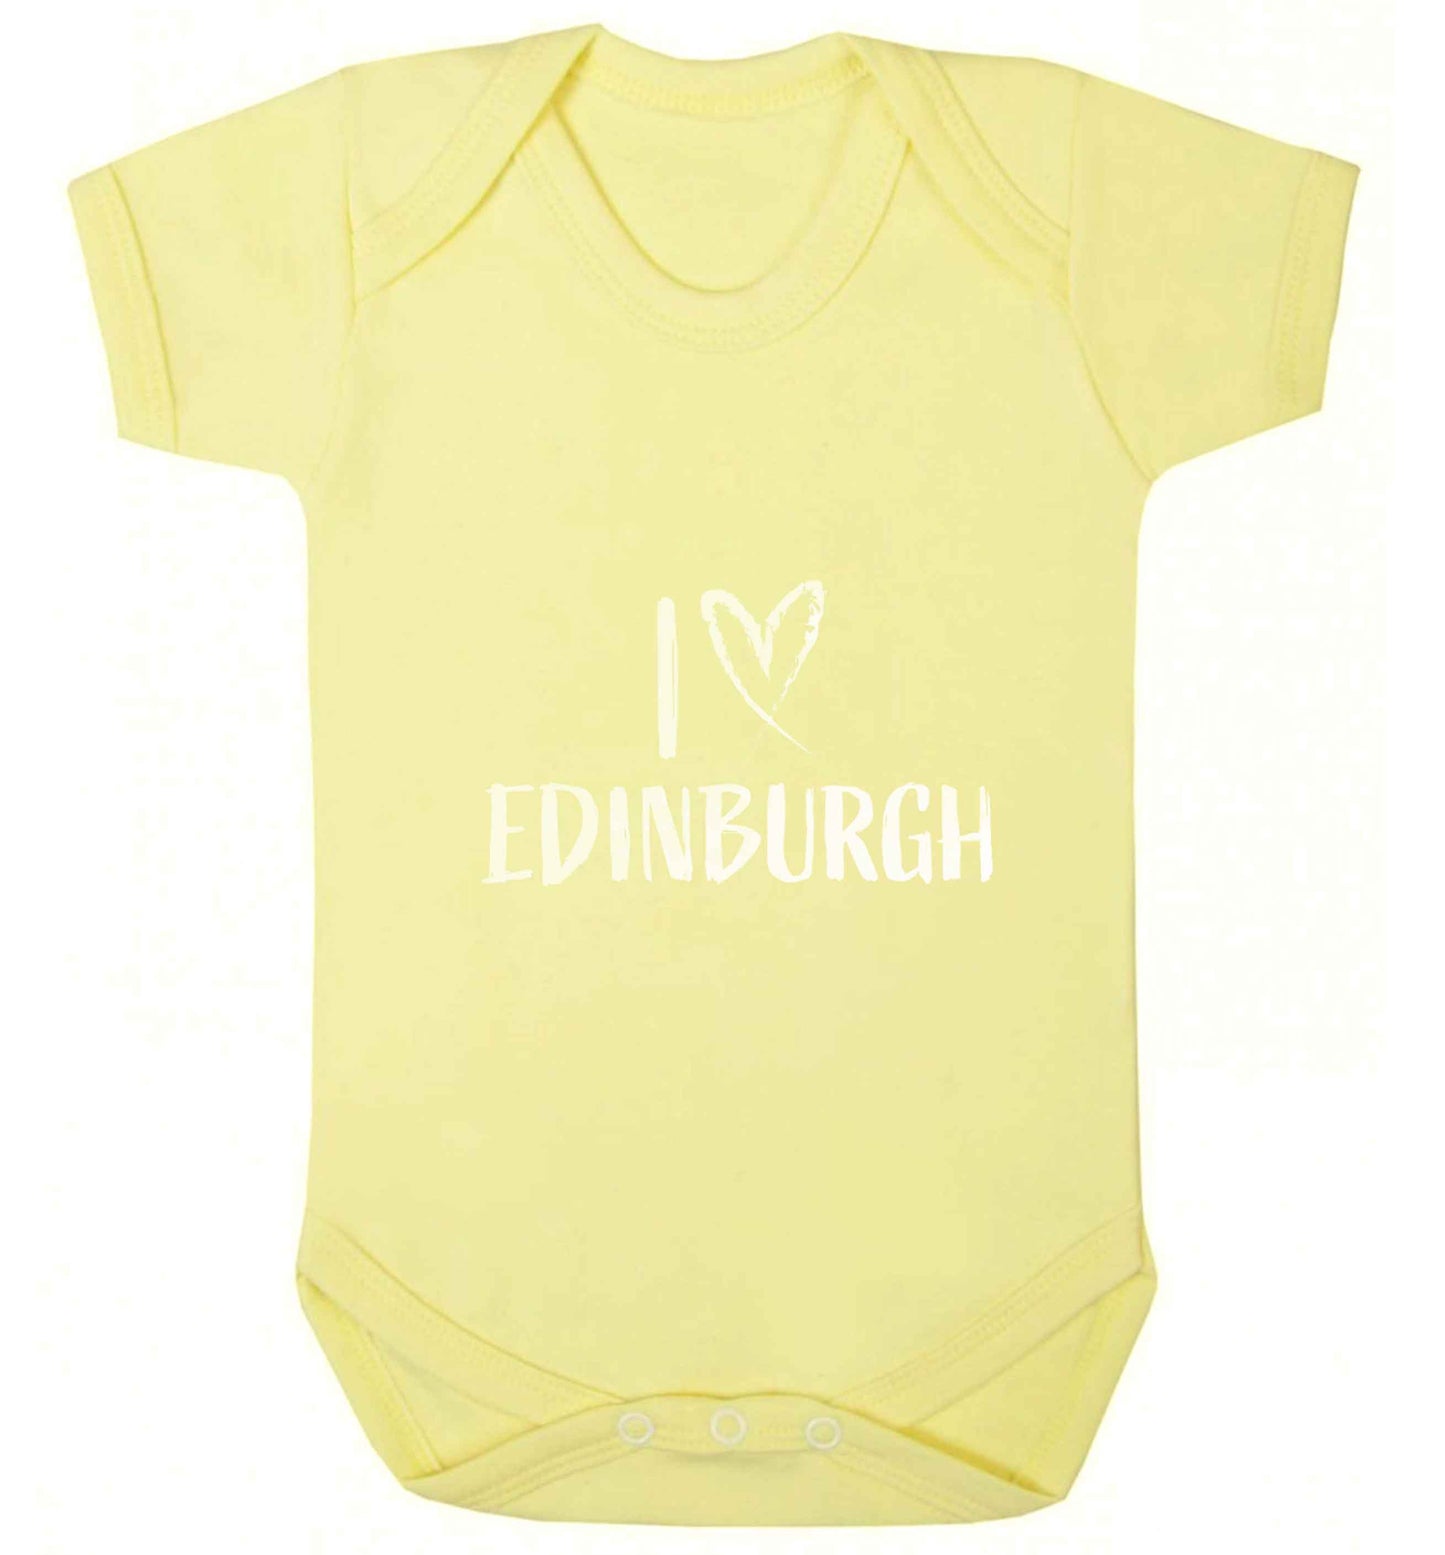 I love Edinburgh baby vest pale yellow 18-24 months